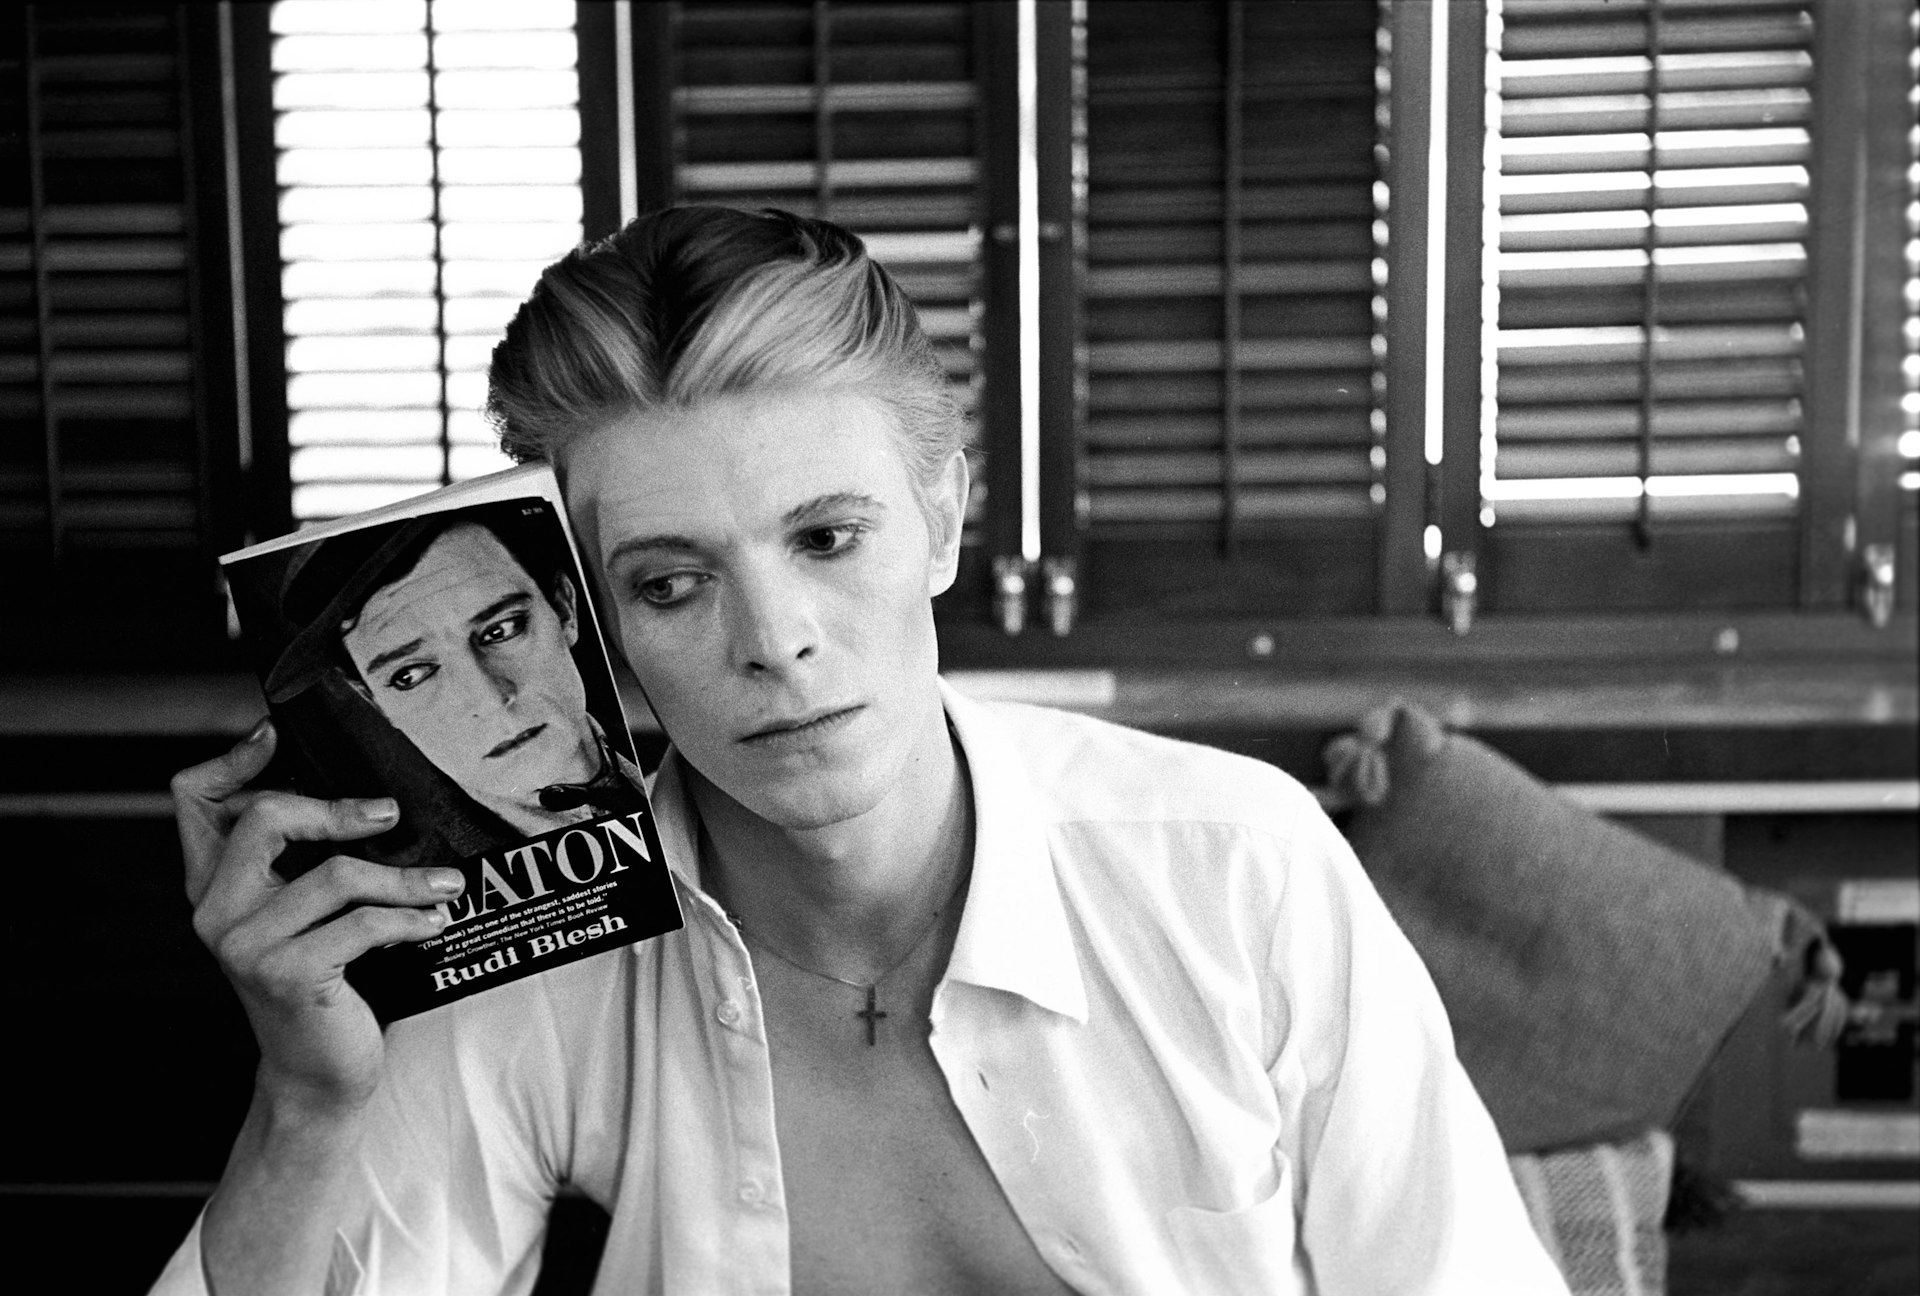 Bowie with Keaton Book, New Mexico 1975 © Steve Schapiro